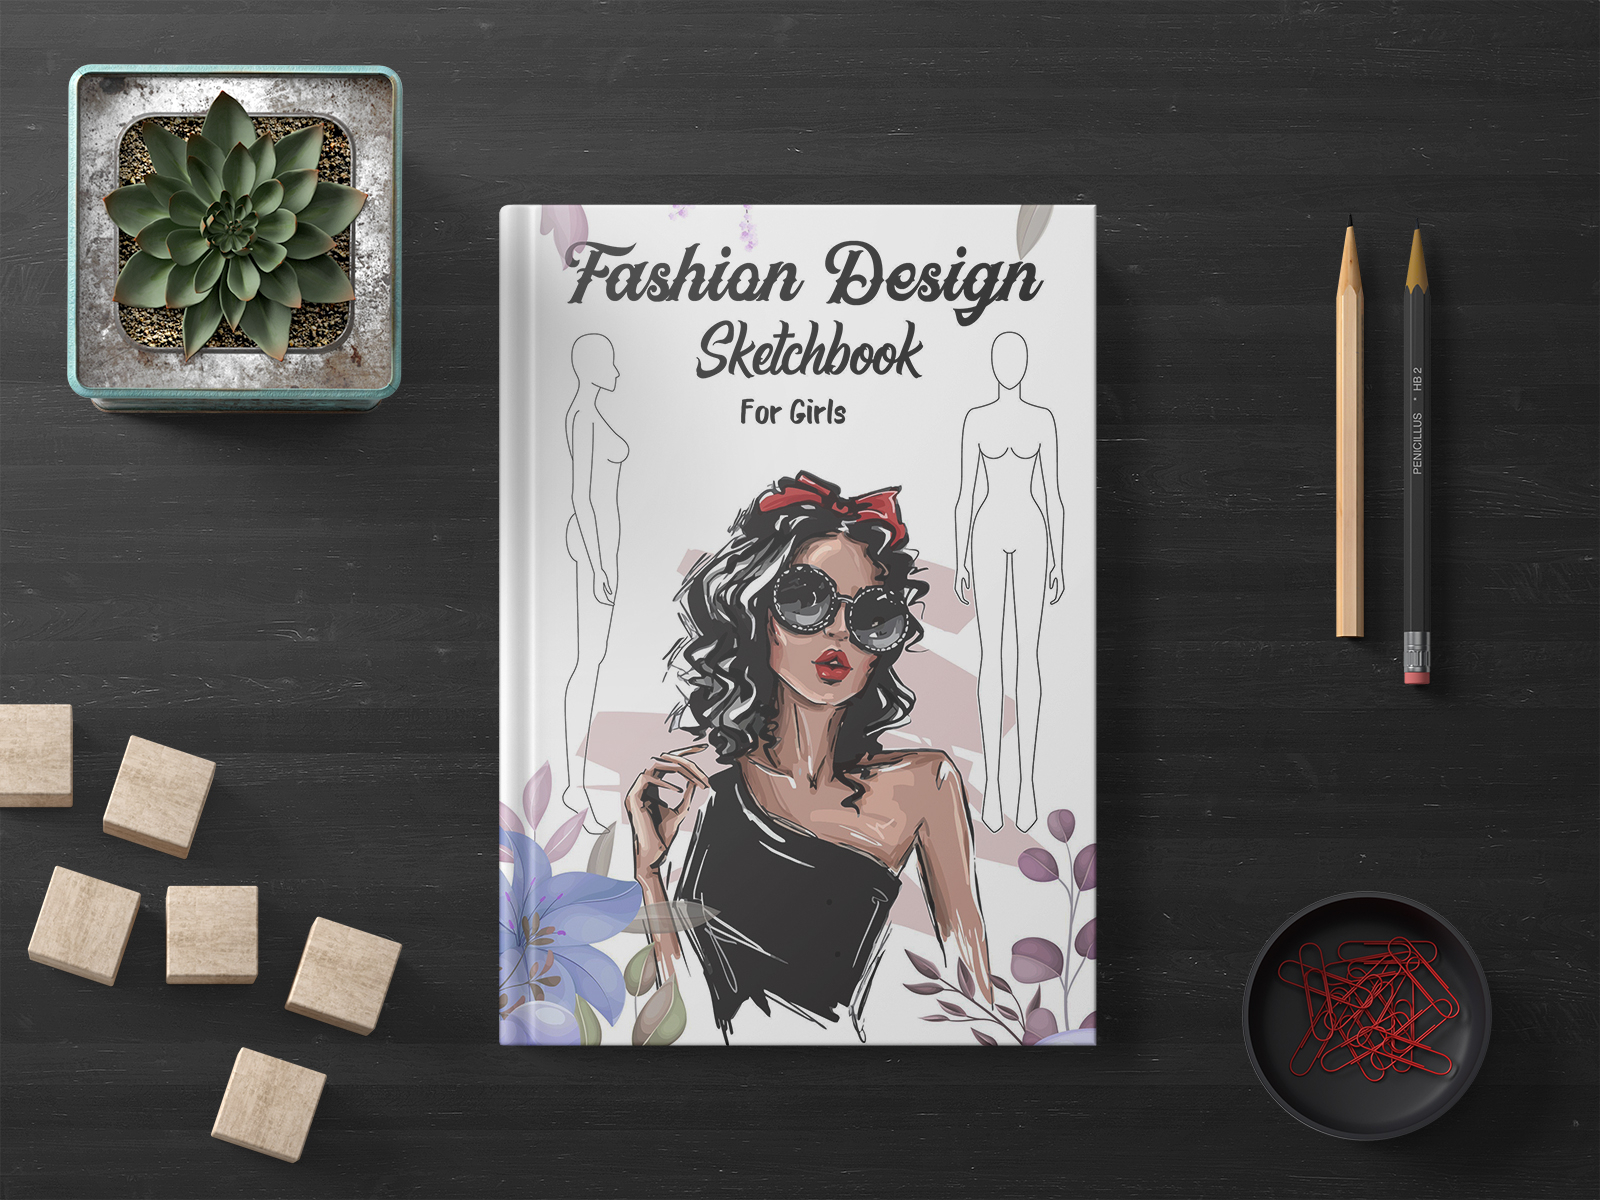 Fashion Design Sketchbook For Girls by Md Rakibul Islam on Dribbble